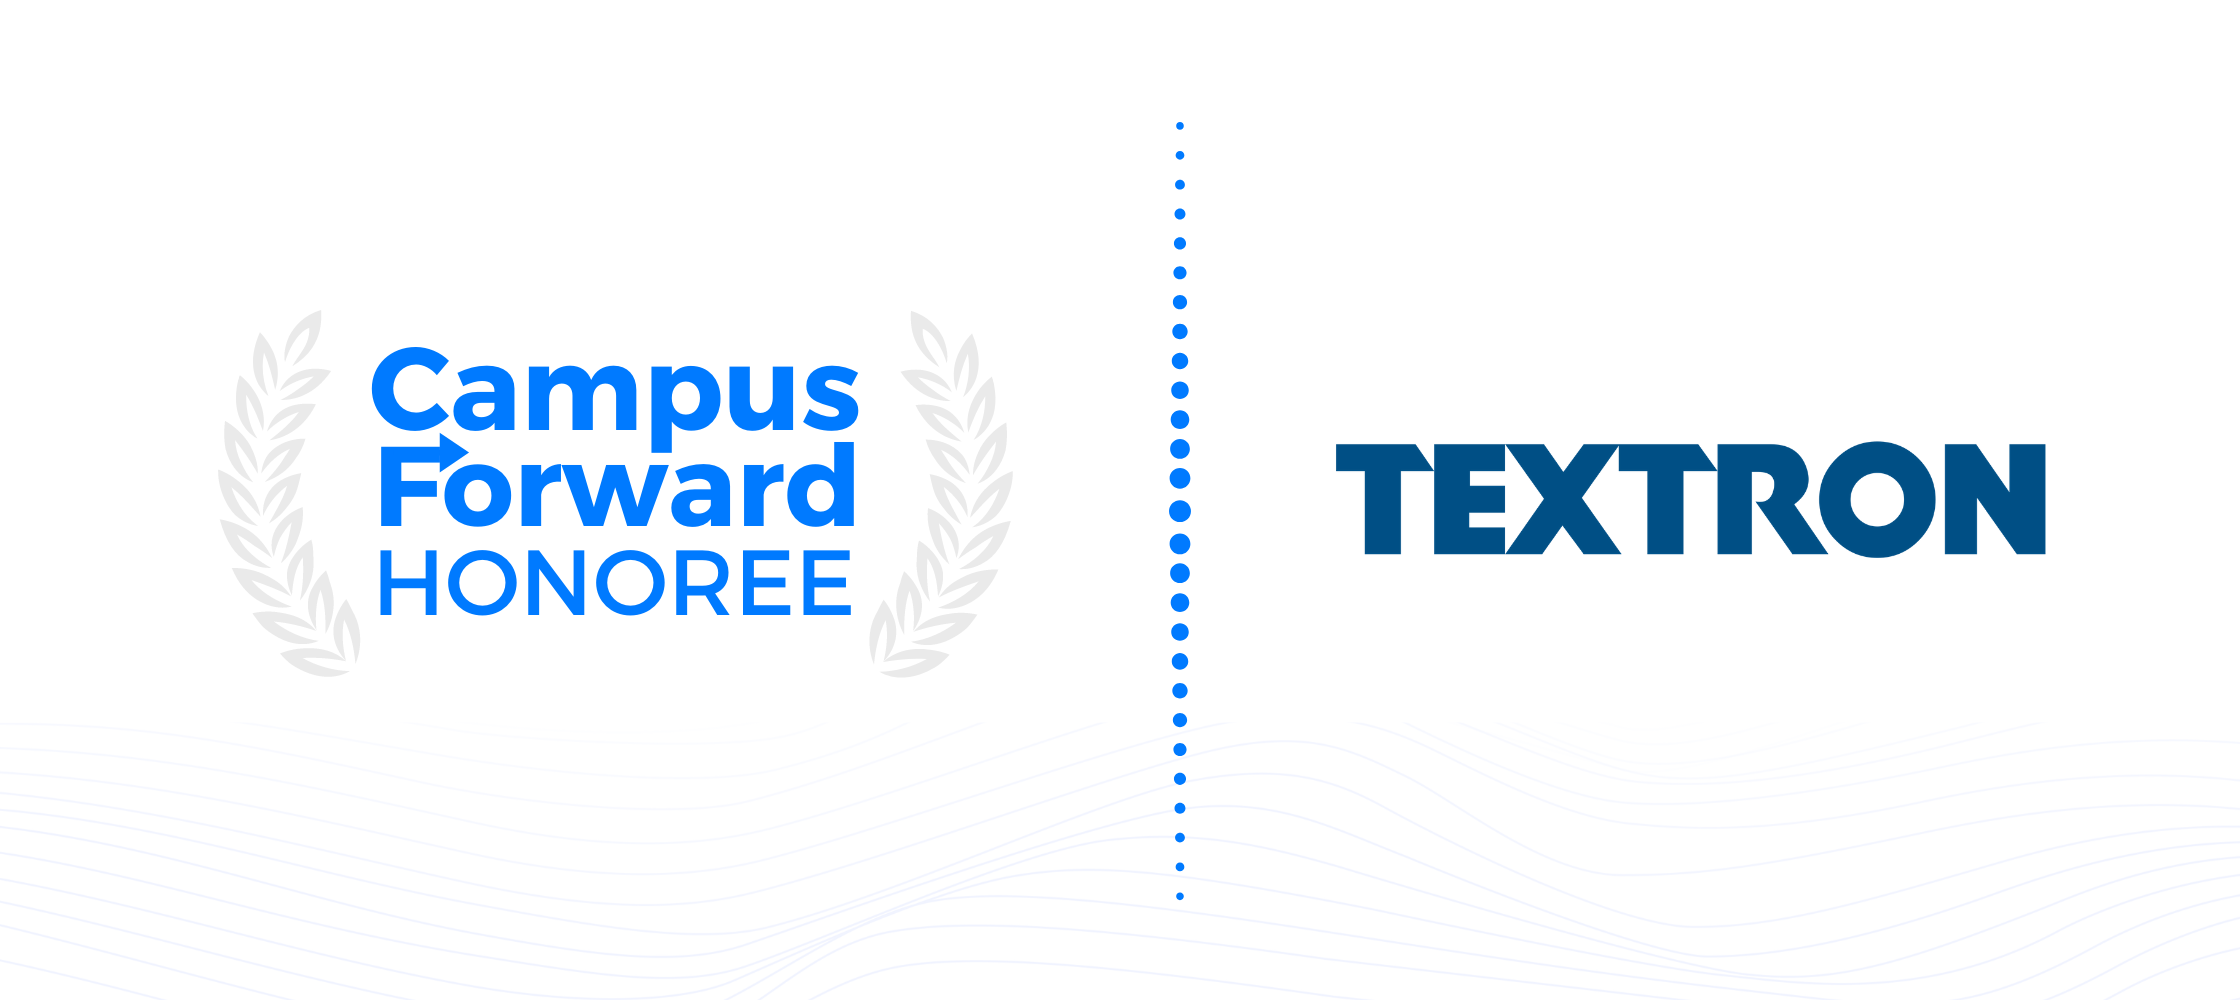 Campus Forward Honoree - Textron